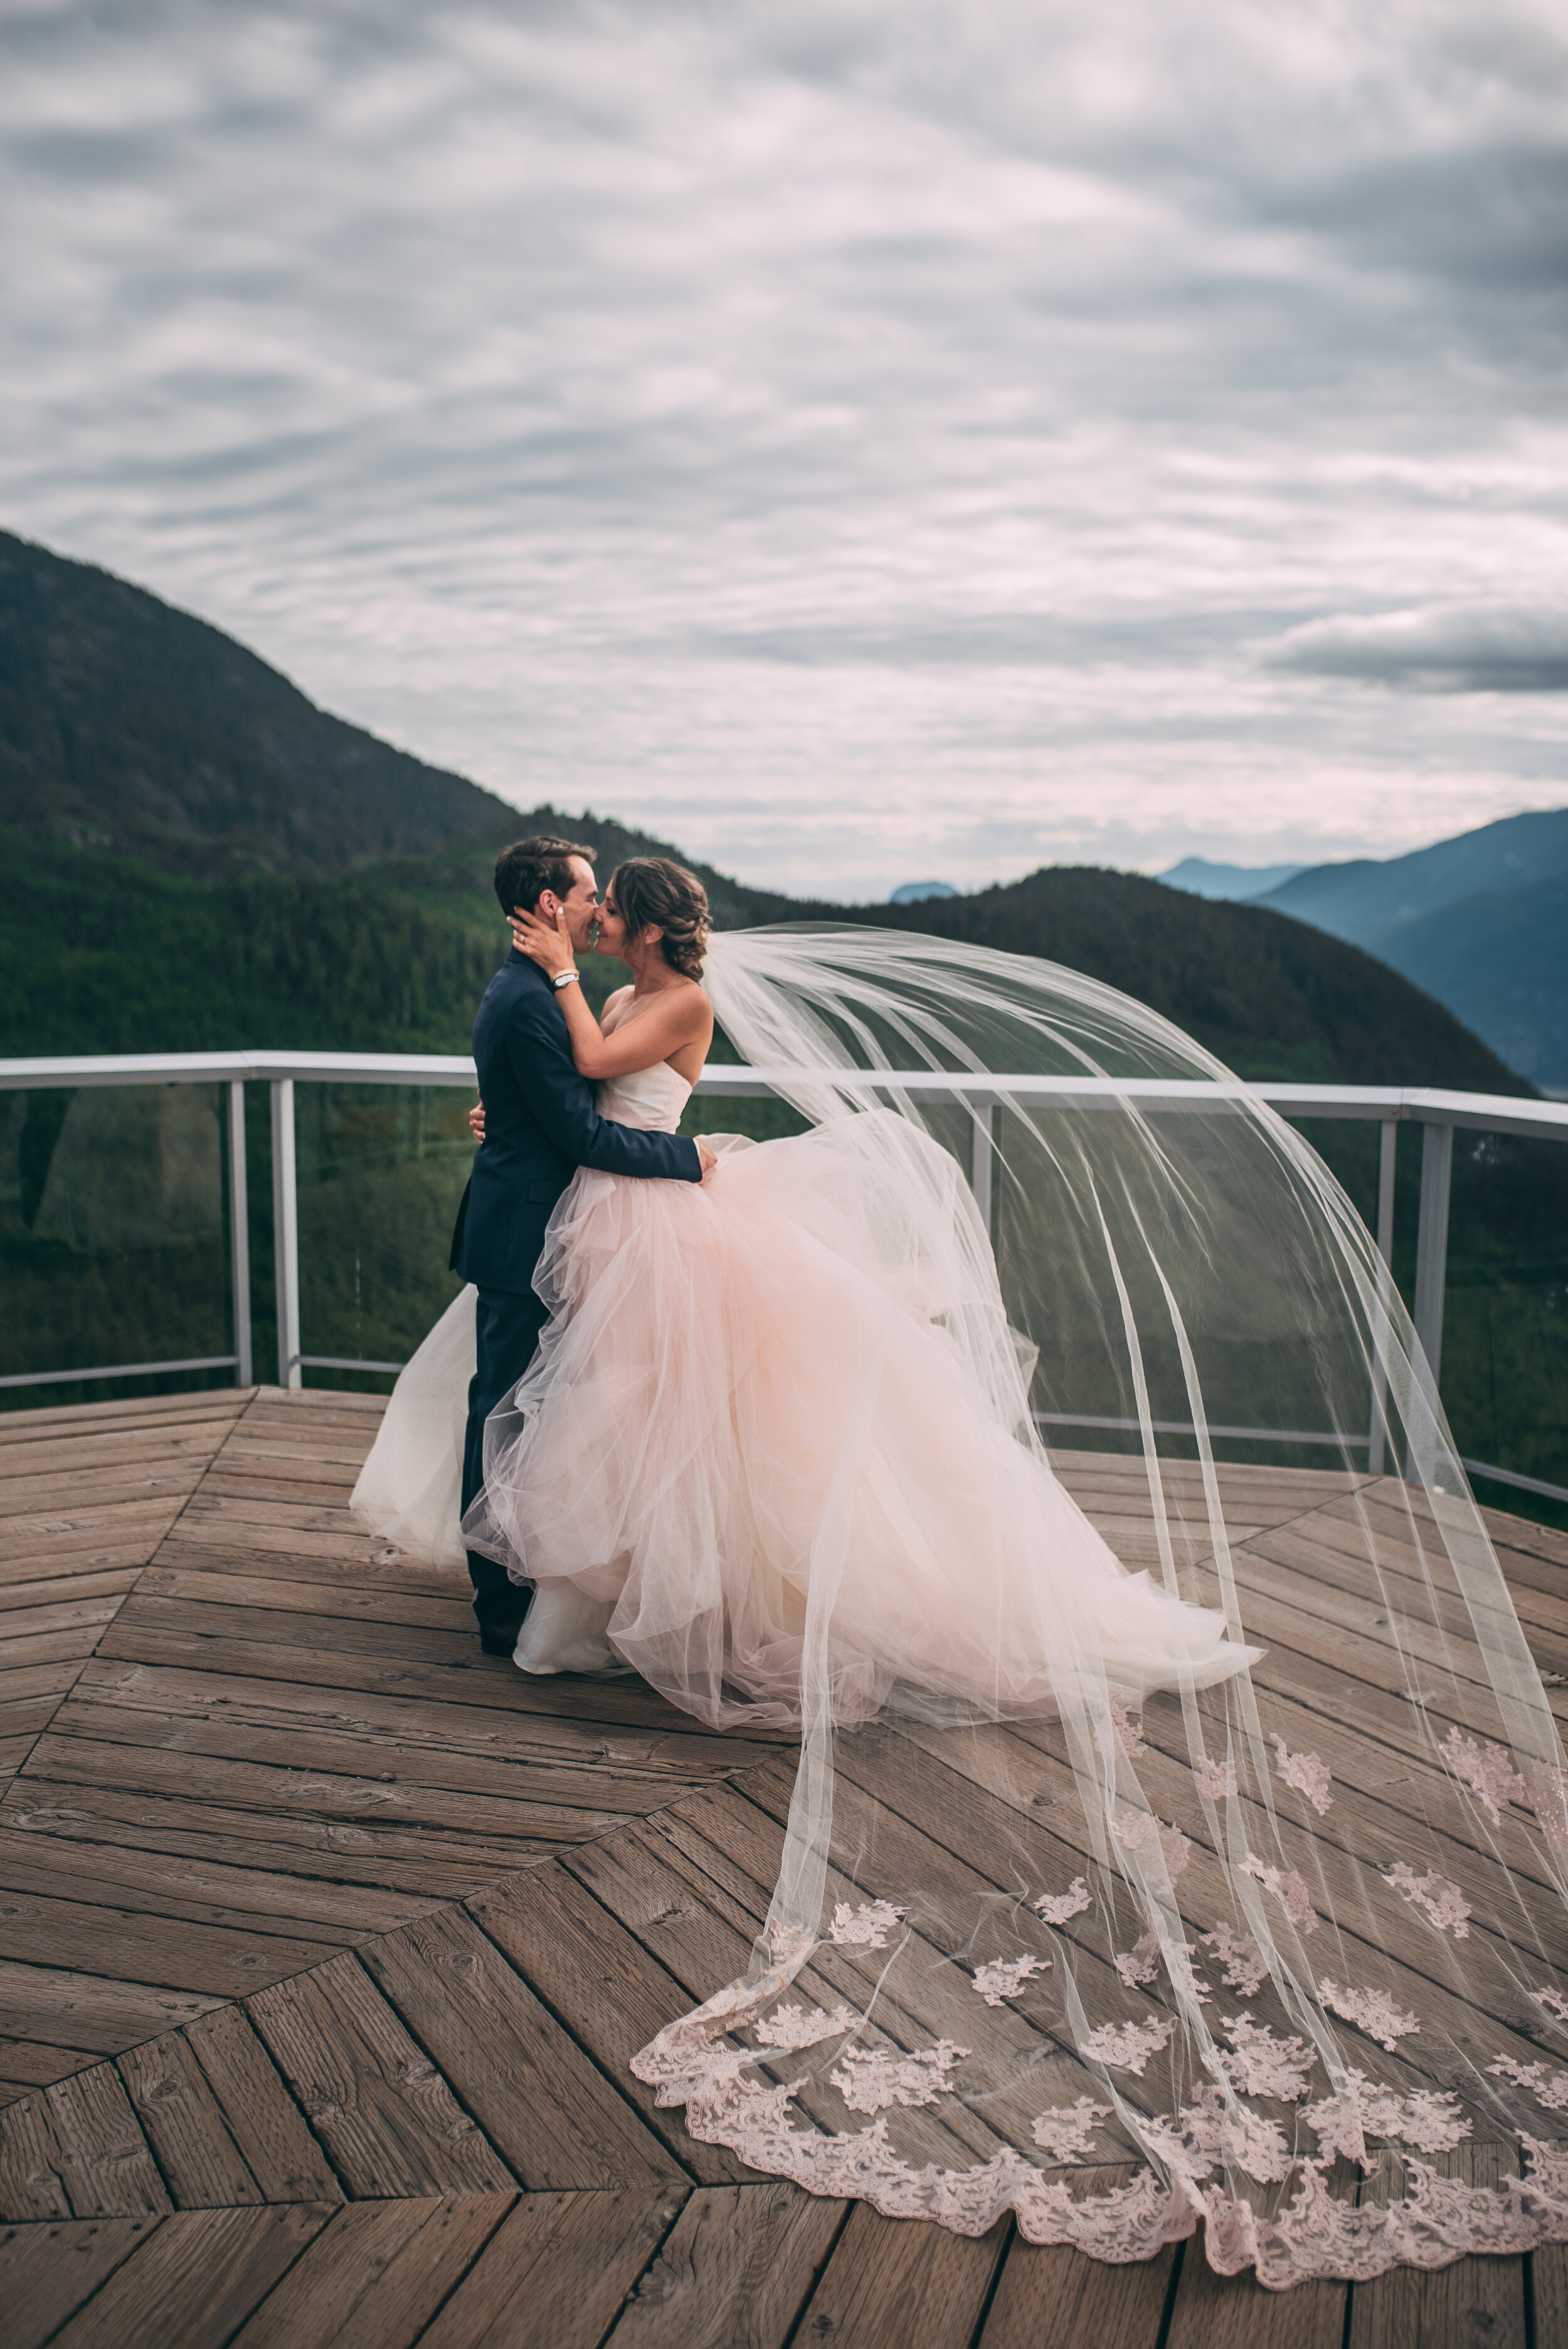 Hayley & Jon Sea to Sky Gondola Wedding - June 17, 2019 - Laura Olson Photography - Sea to Sky Wedding Photographer-5624.jpg